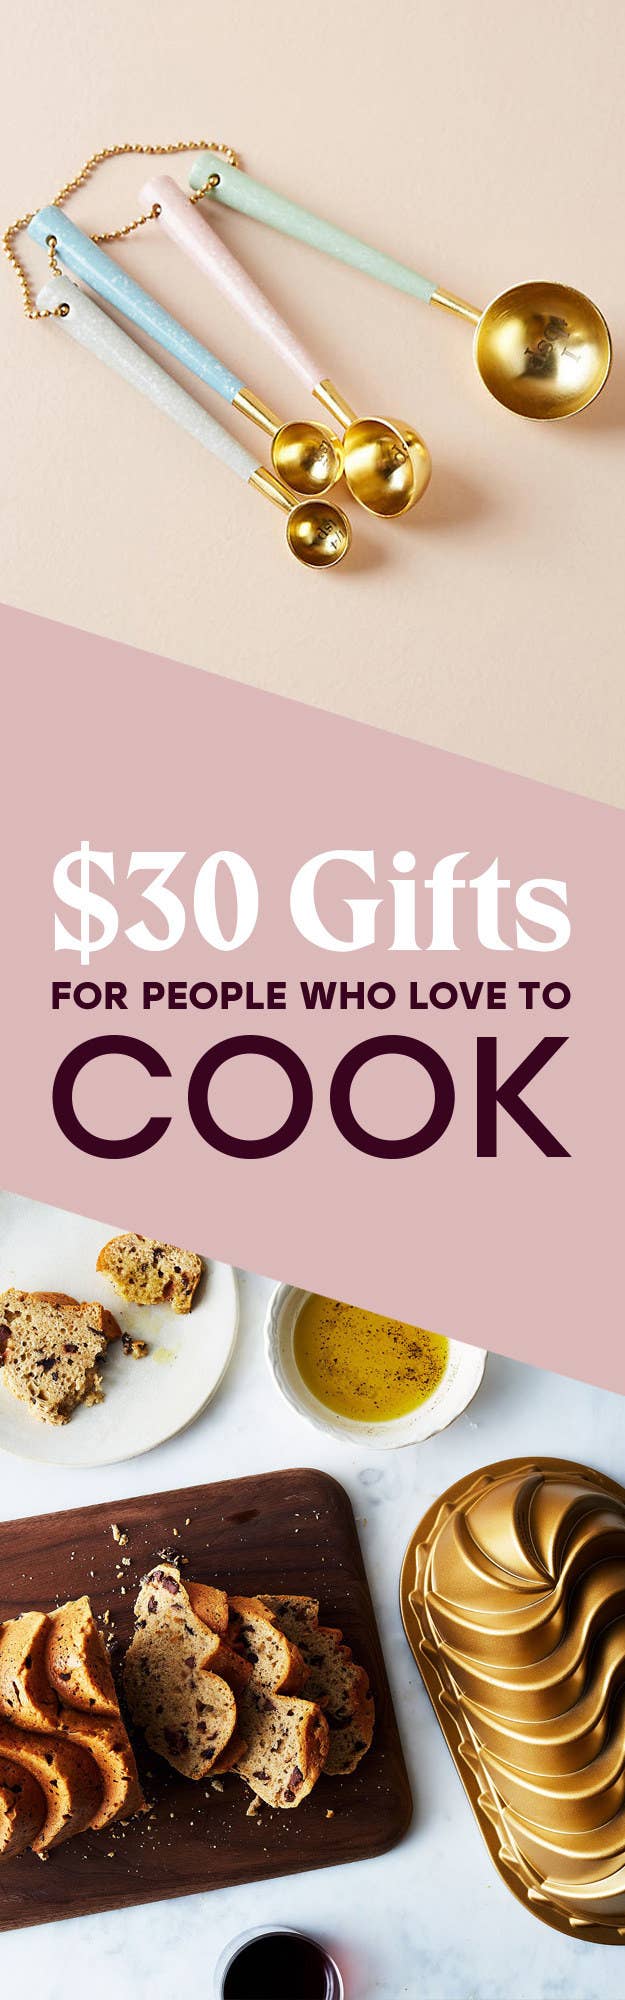 30 Best Cooking Gifts: KitchenAid, Staub and More - Skinnytaste